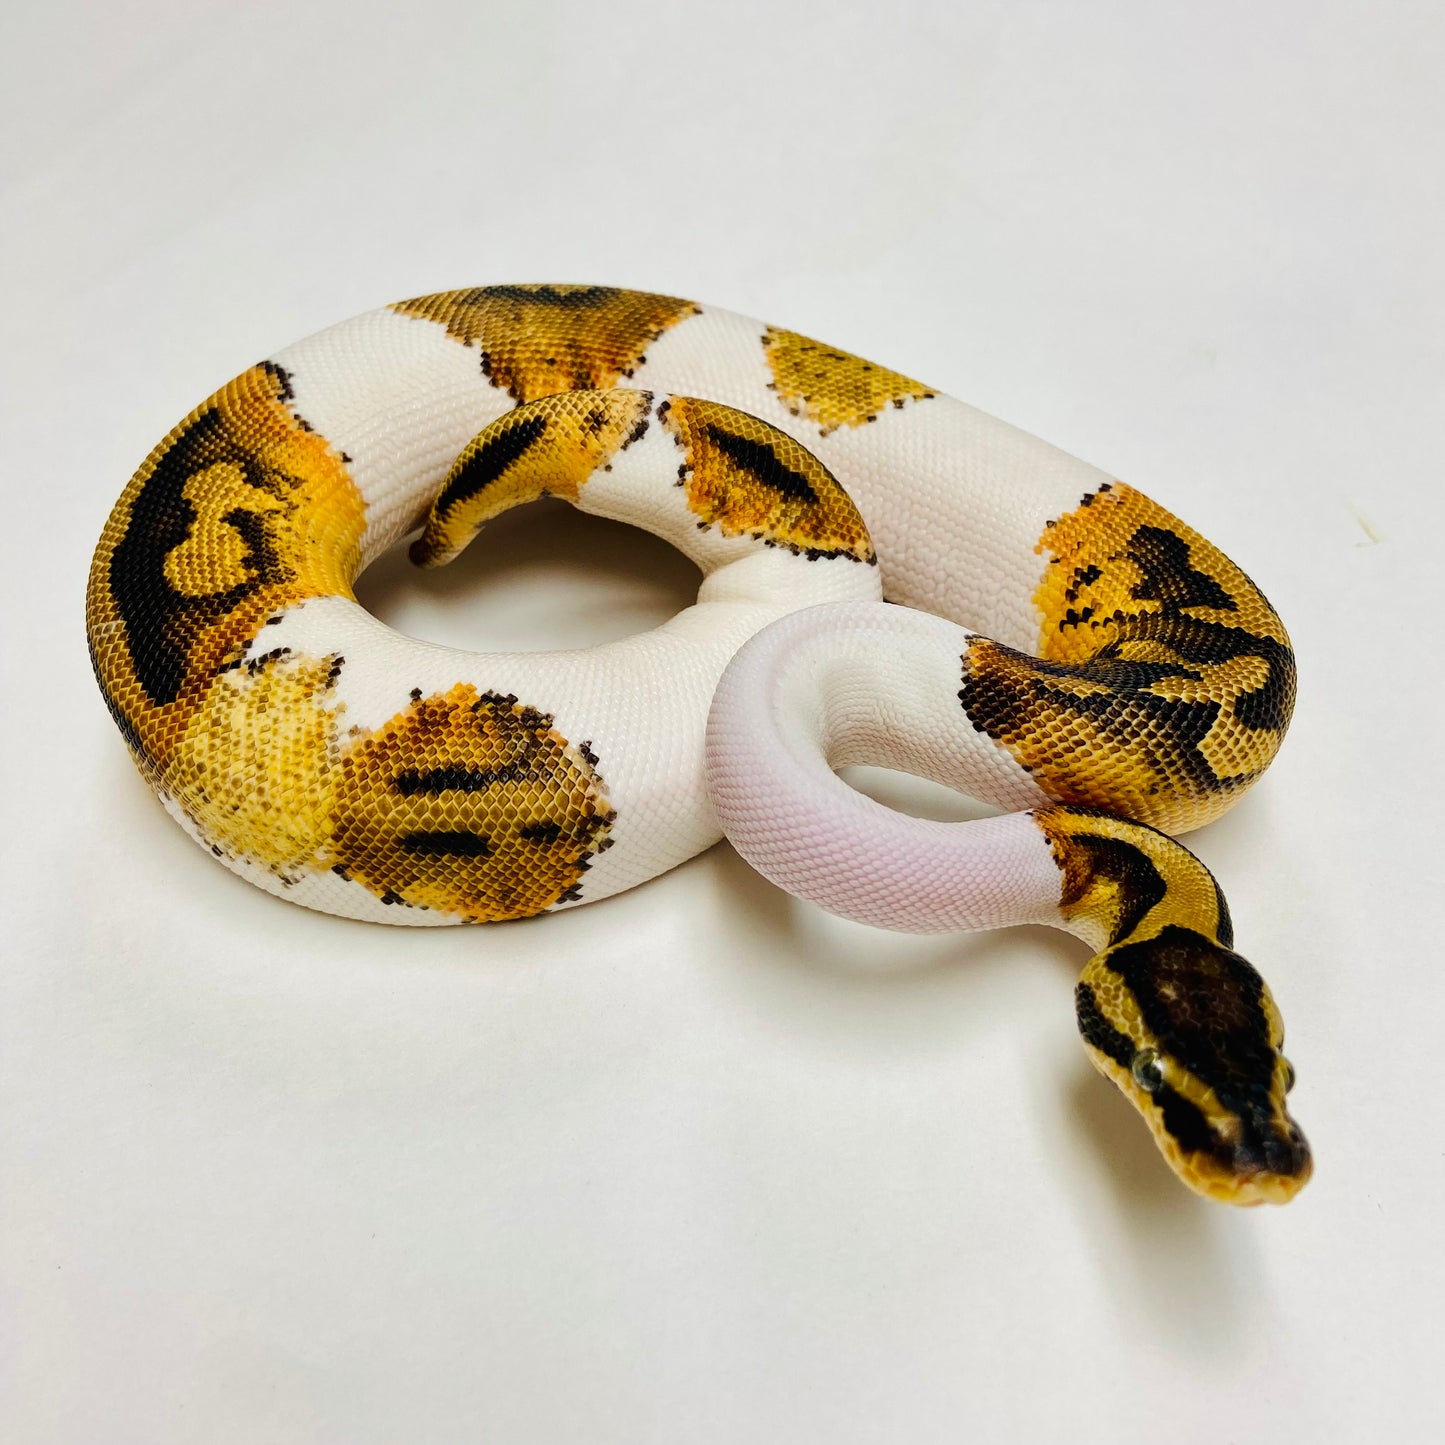 Pied Ball Python- Male #2023M01